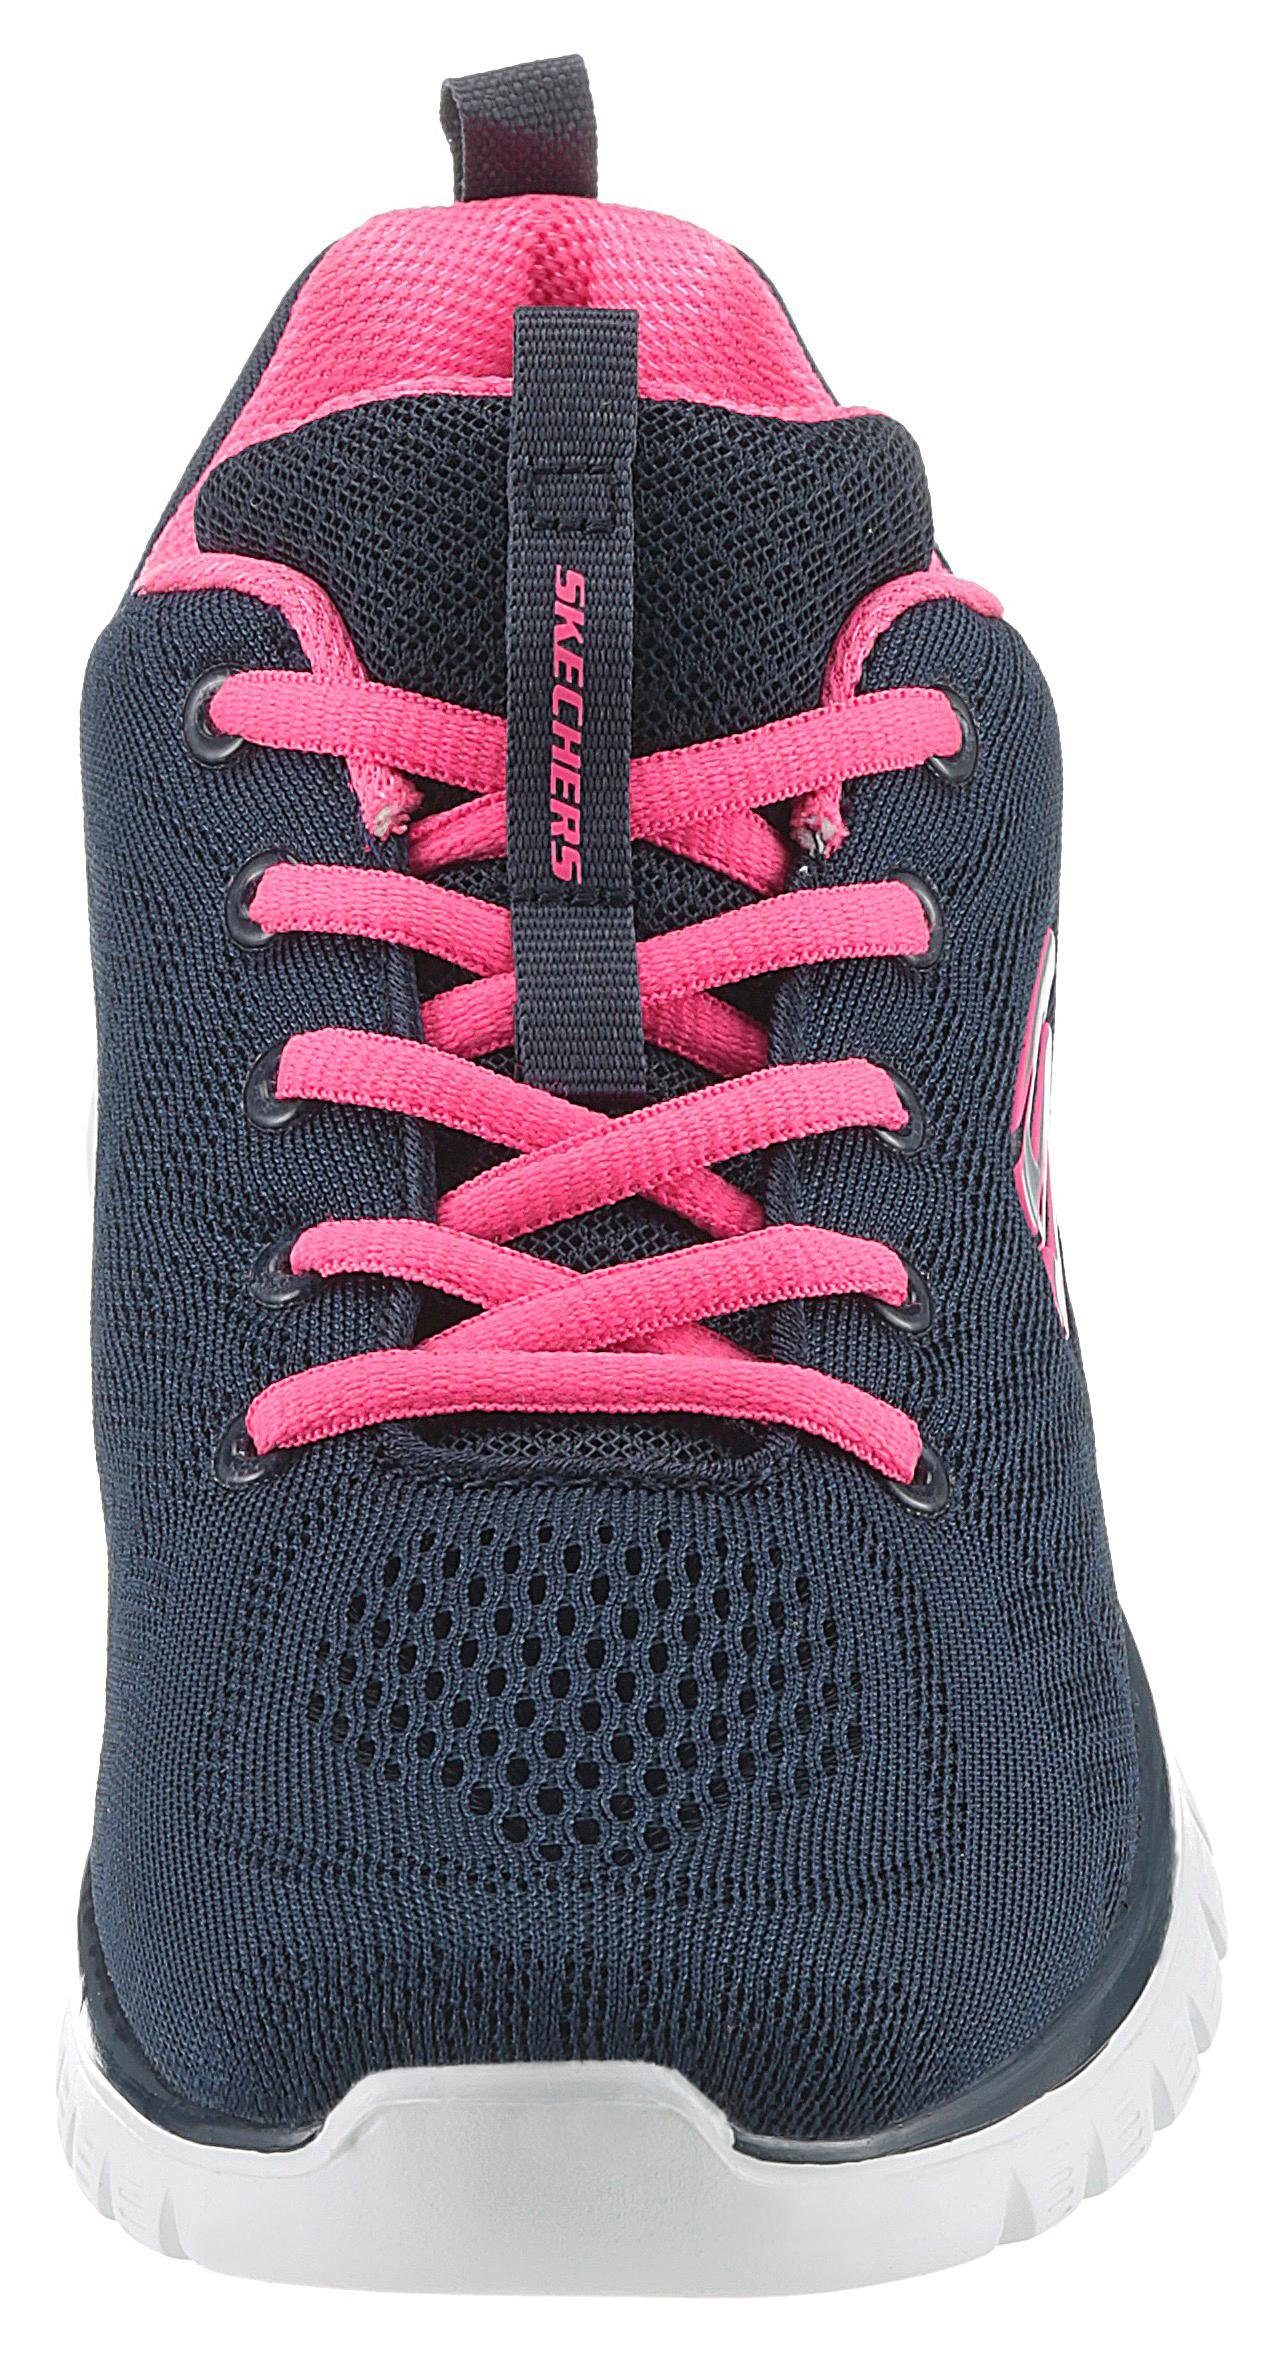 navy-pink durch Get Skechers Graceful mit Memory Connected Foam - Sneaker Dämpfung